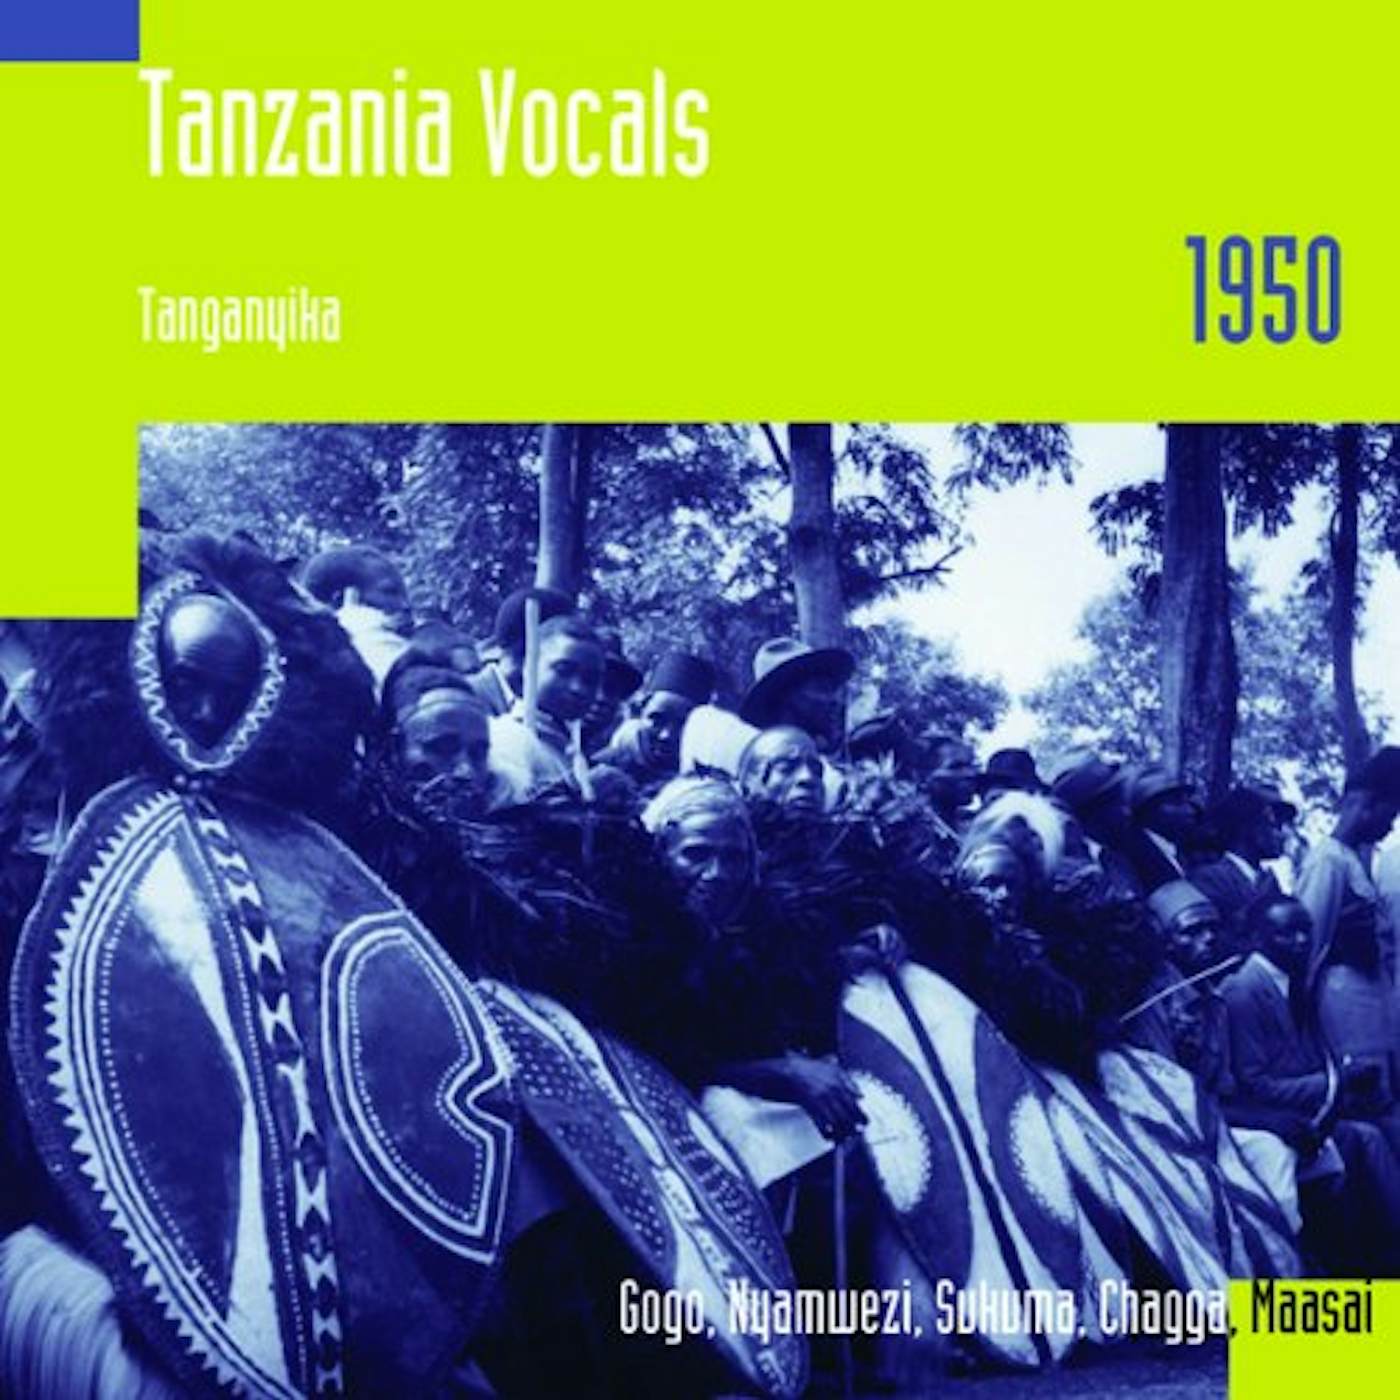 Hugh Tracey TANZANIA VOCALS: TANGANYIKA 1950 CD